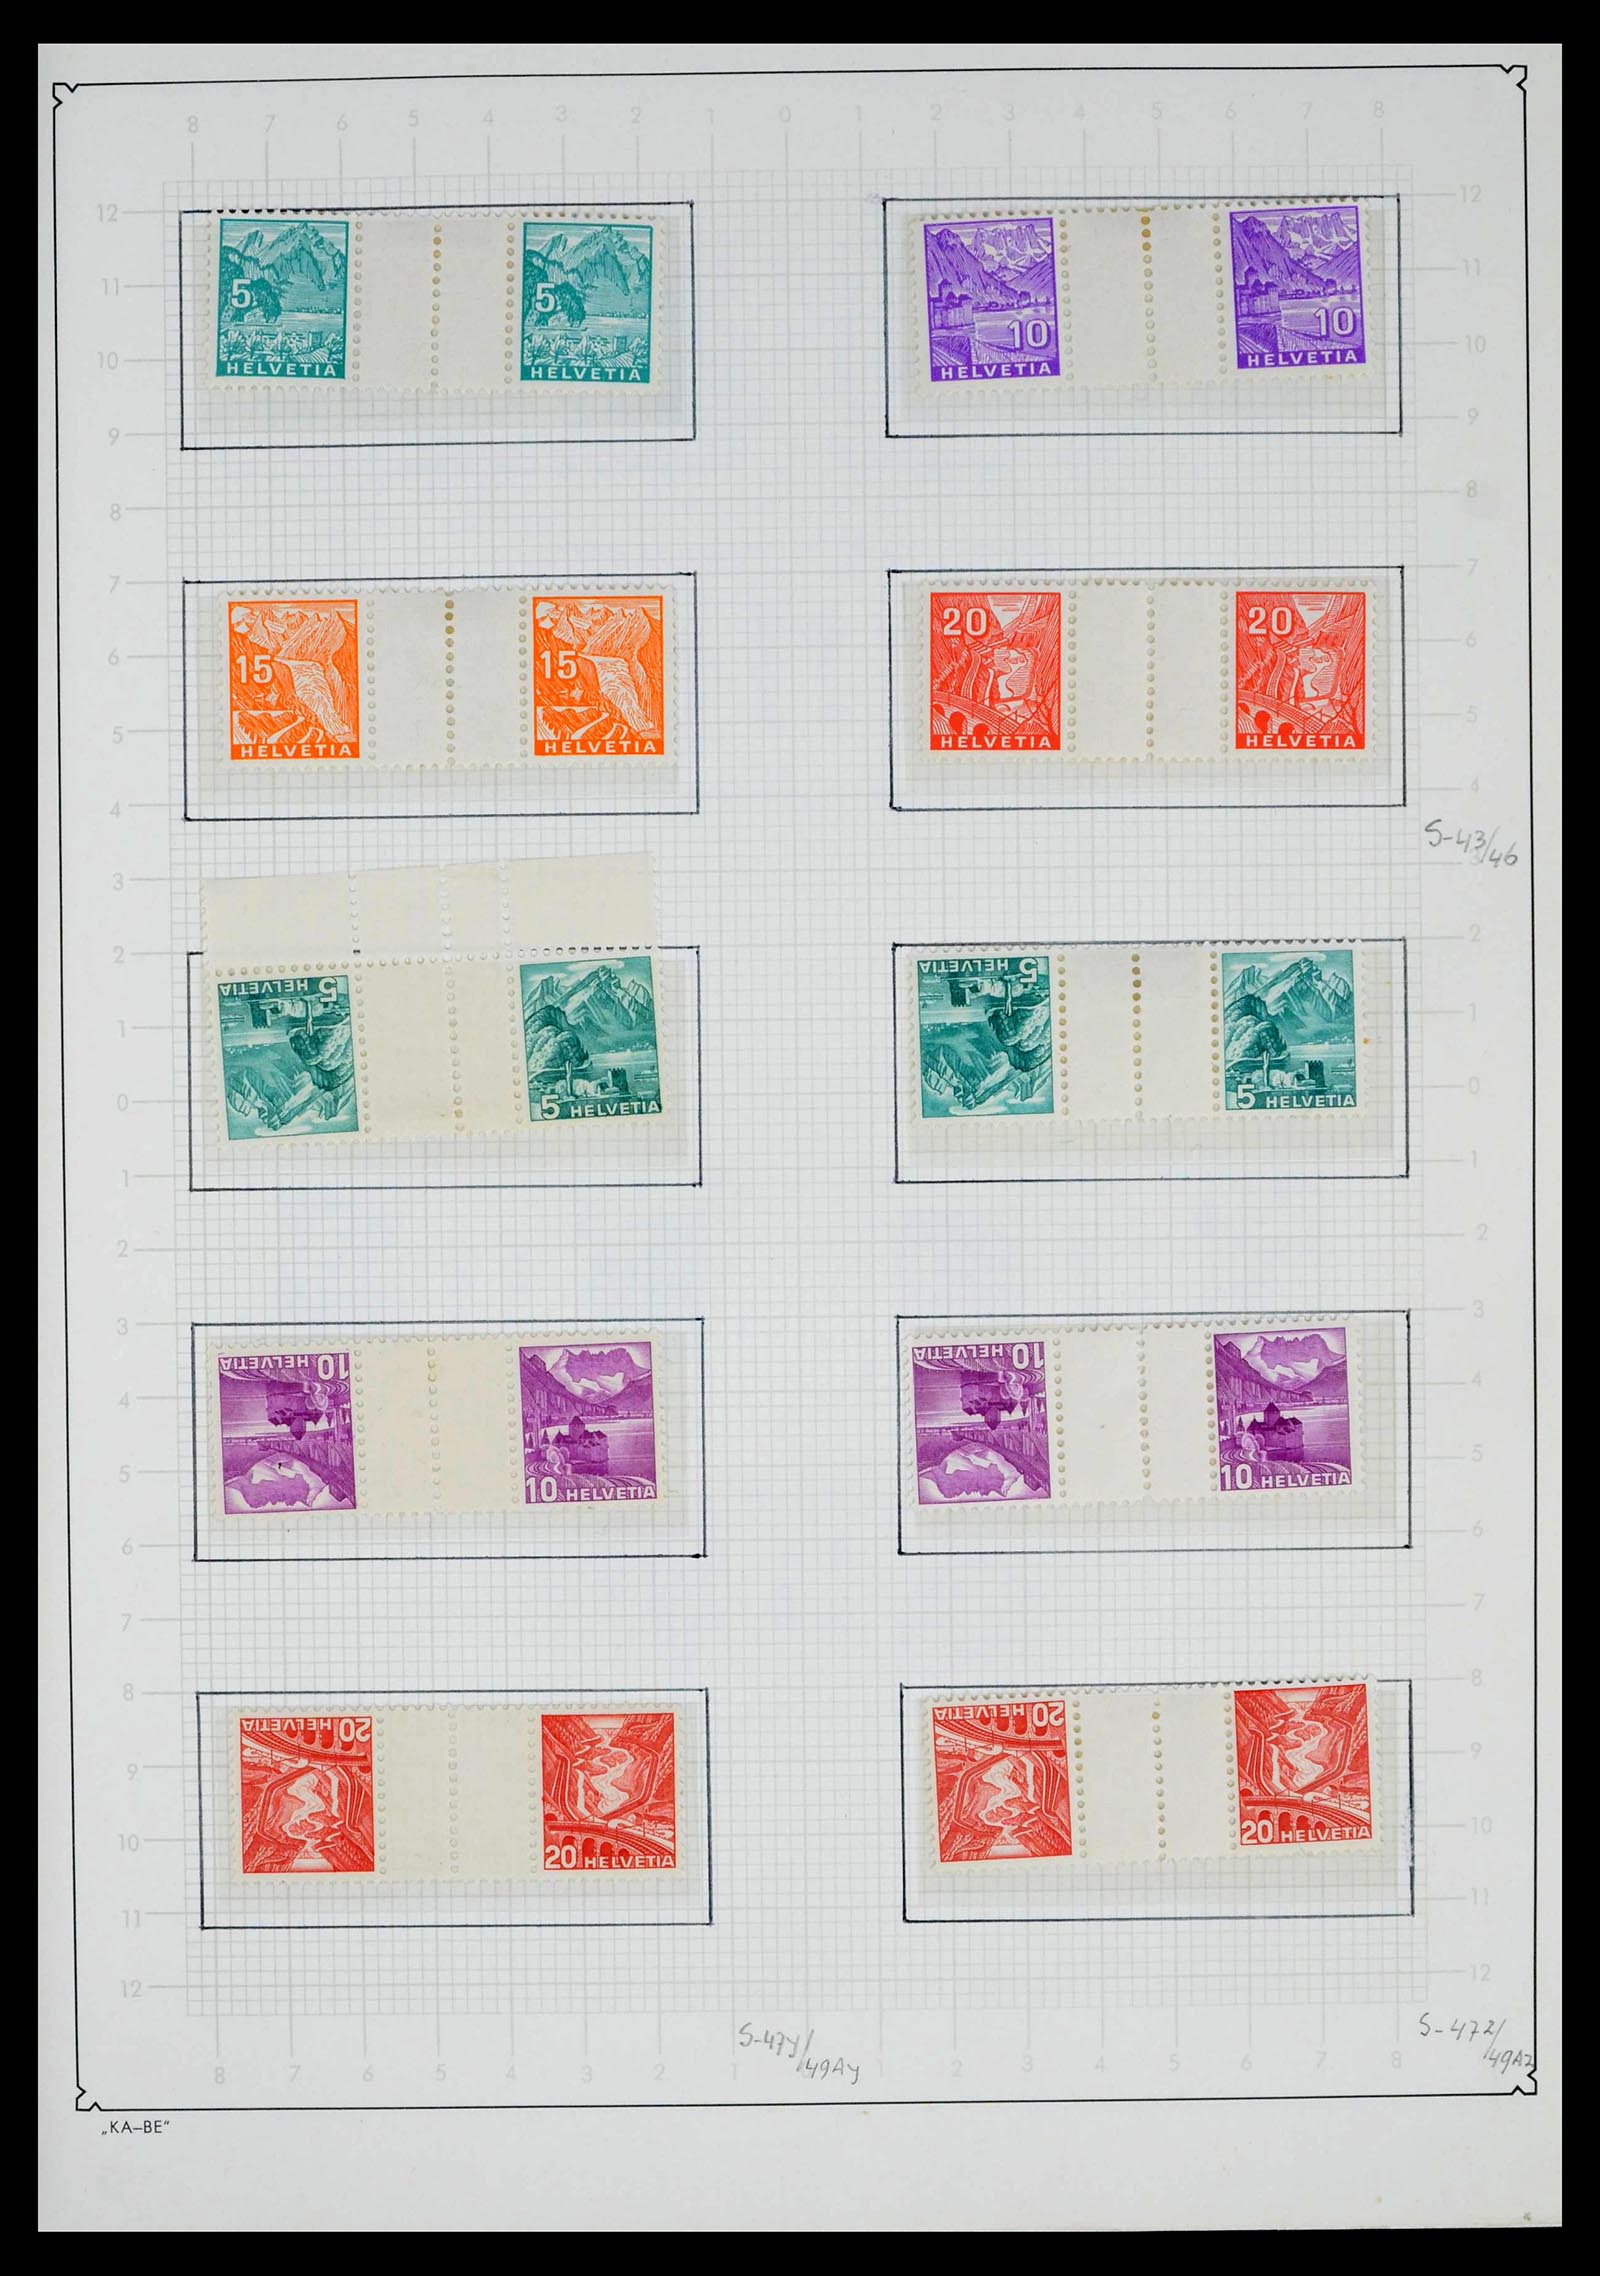 39420 0185 - Stamp collection 39420 Switzerland 1862-1974.